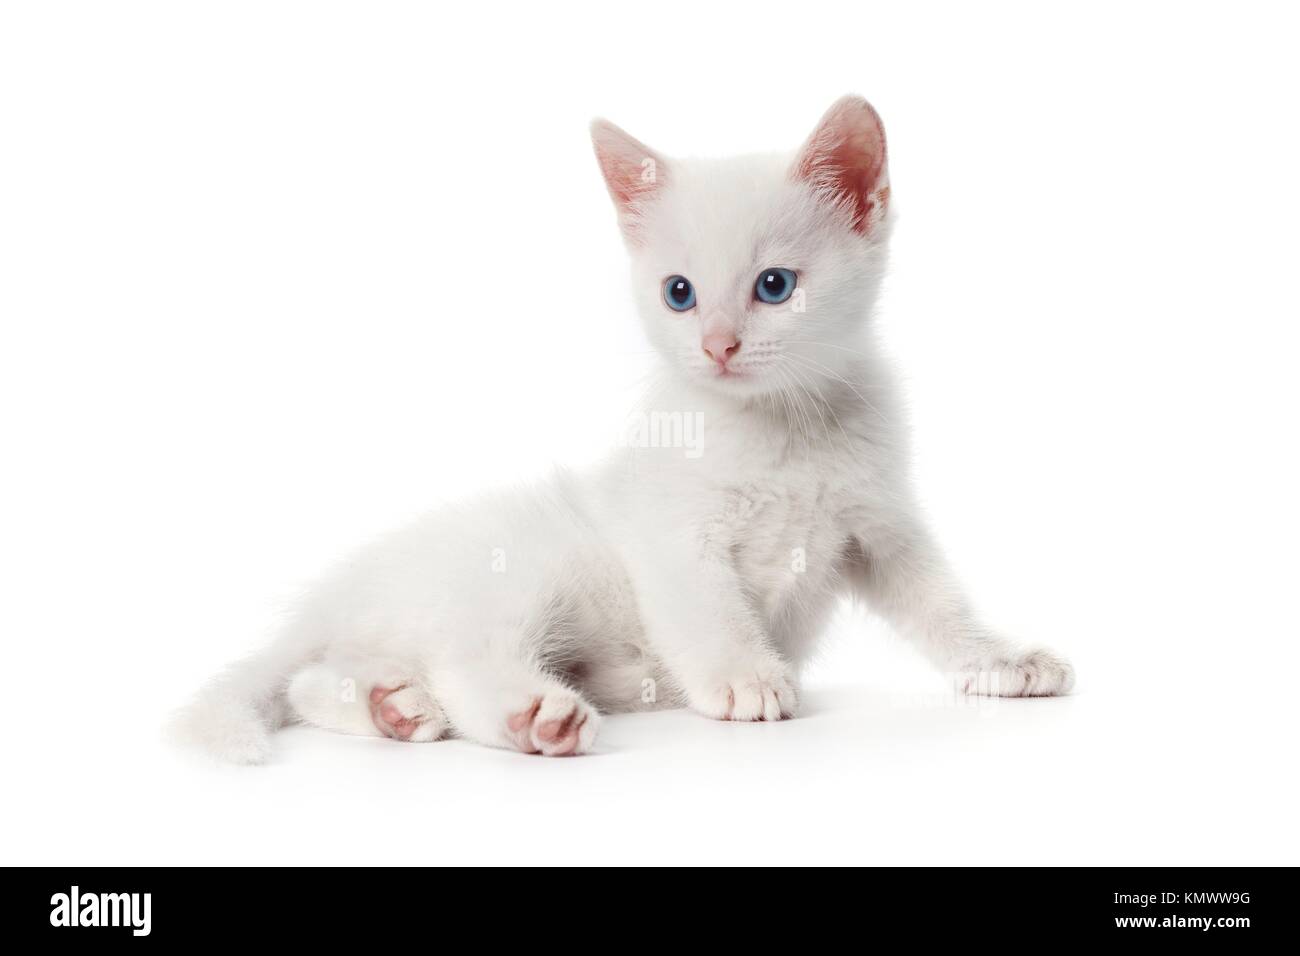 Cute white kitten with blue eyes on white background Stock Photo ...